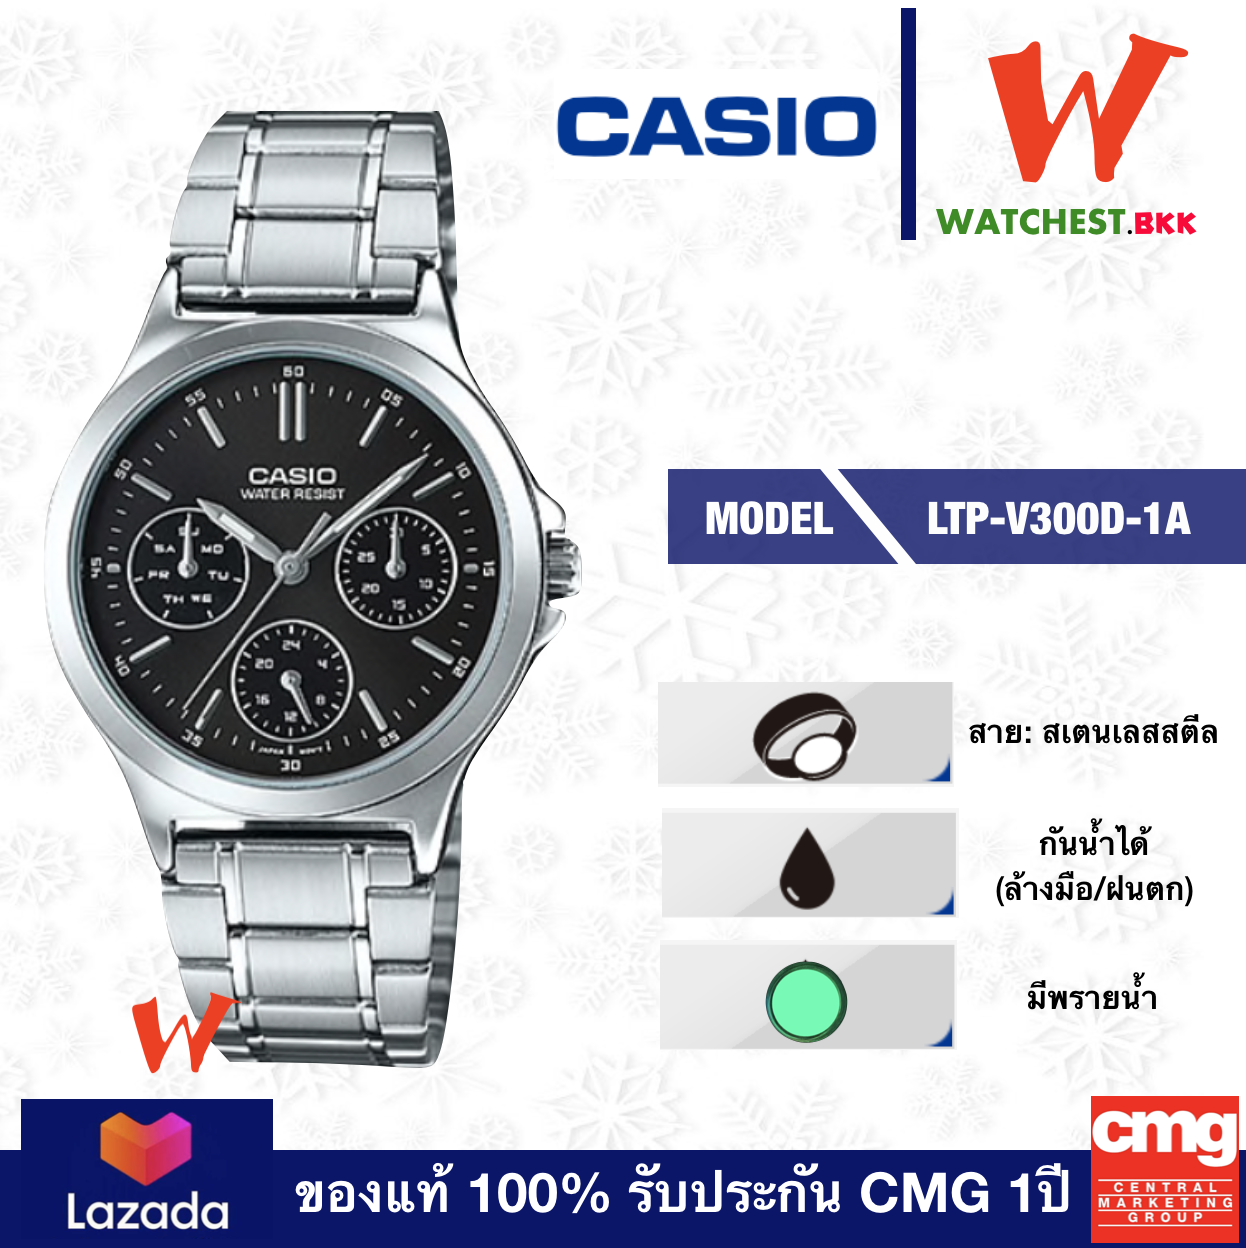 casio นาฬิกาข้อมือผู้หญิง สายสเตนเลส รุ่น LTP-V300D-1A คาสิโอ้ สายเหล็ก ตัวล็อกบานพับ (watchestbkk คาสิโอ แท้ ของแท้100% ประกัน CMG)